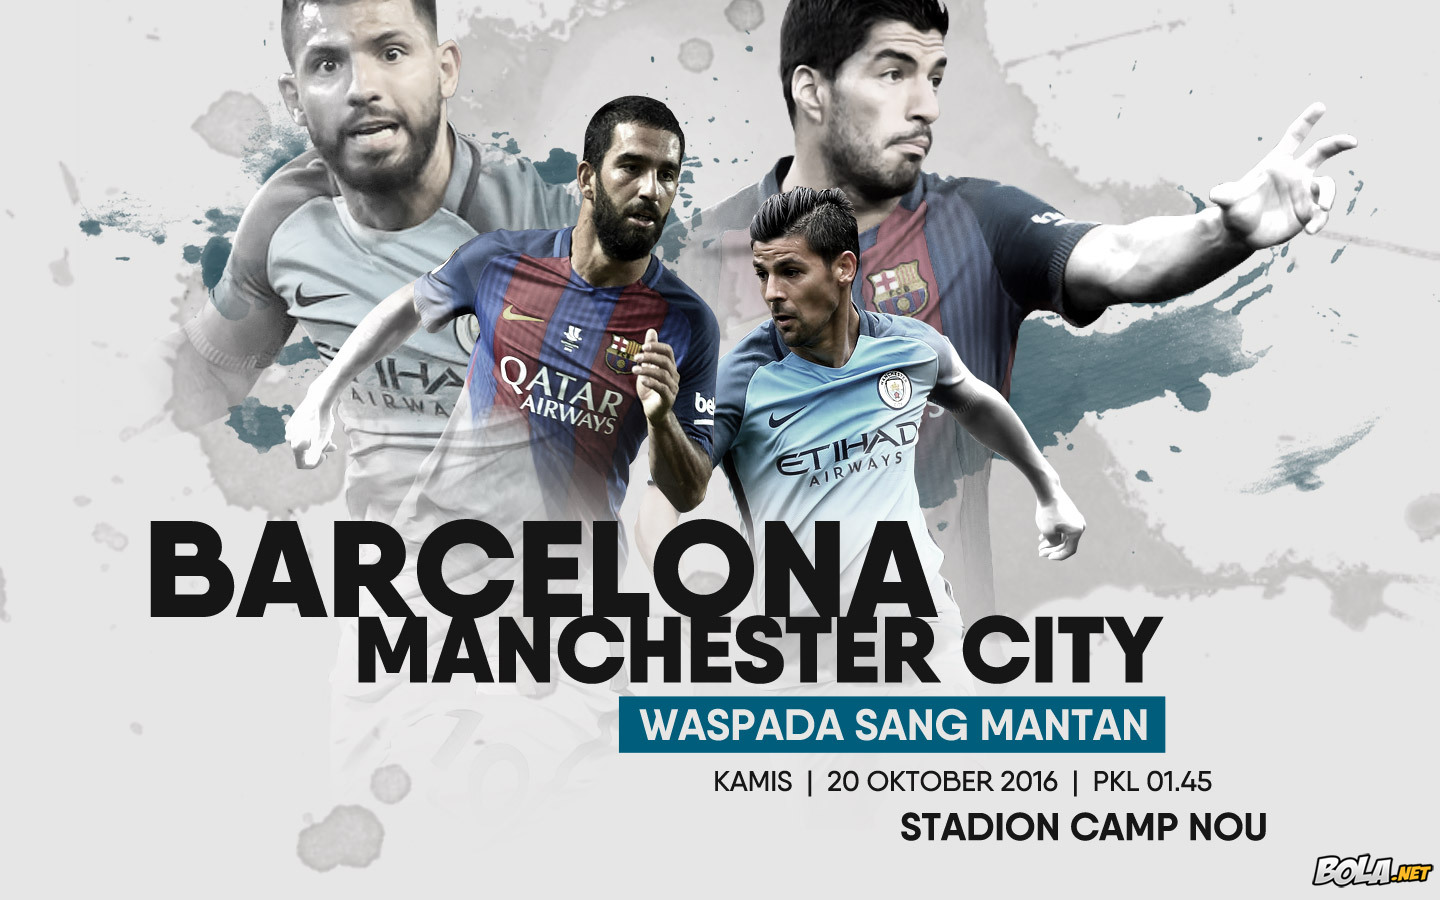 Deskripsi : Wallpaper Barcelona Vs Manchester City, size: 1440x900